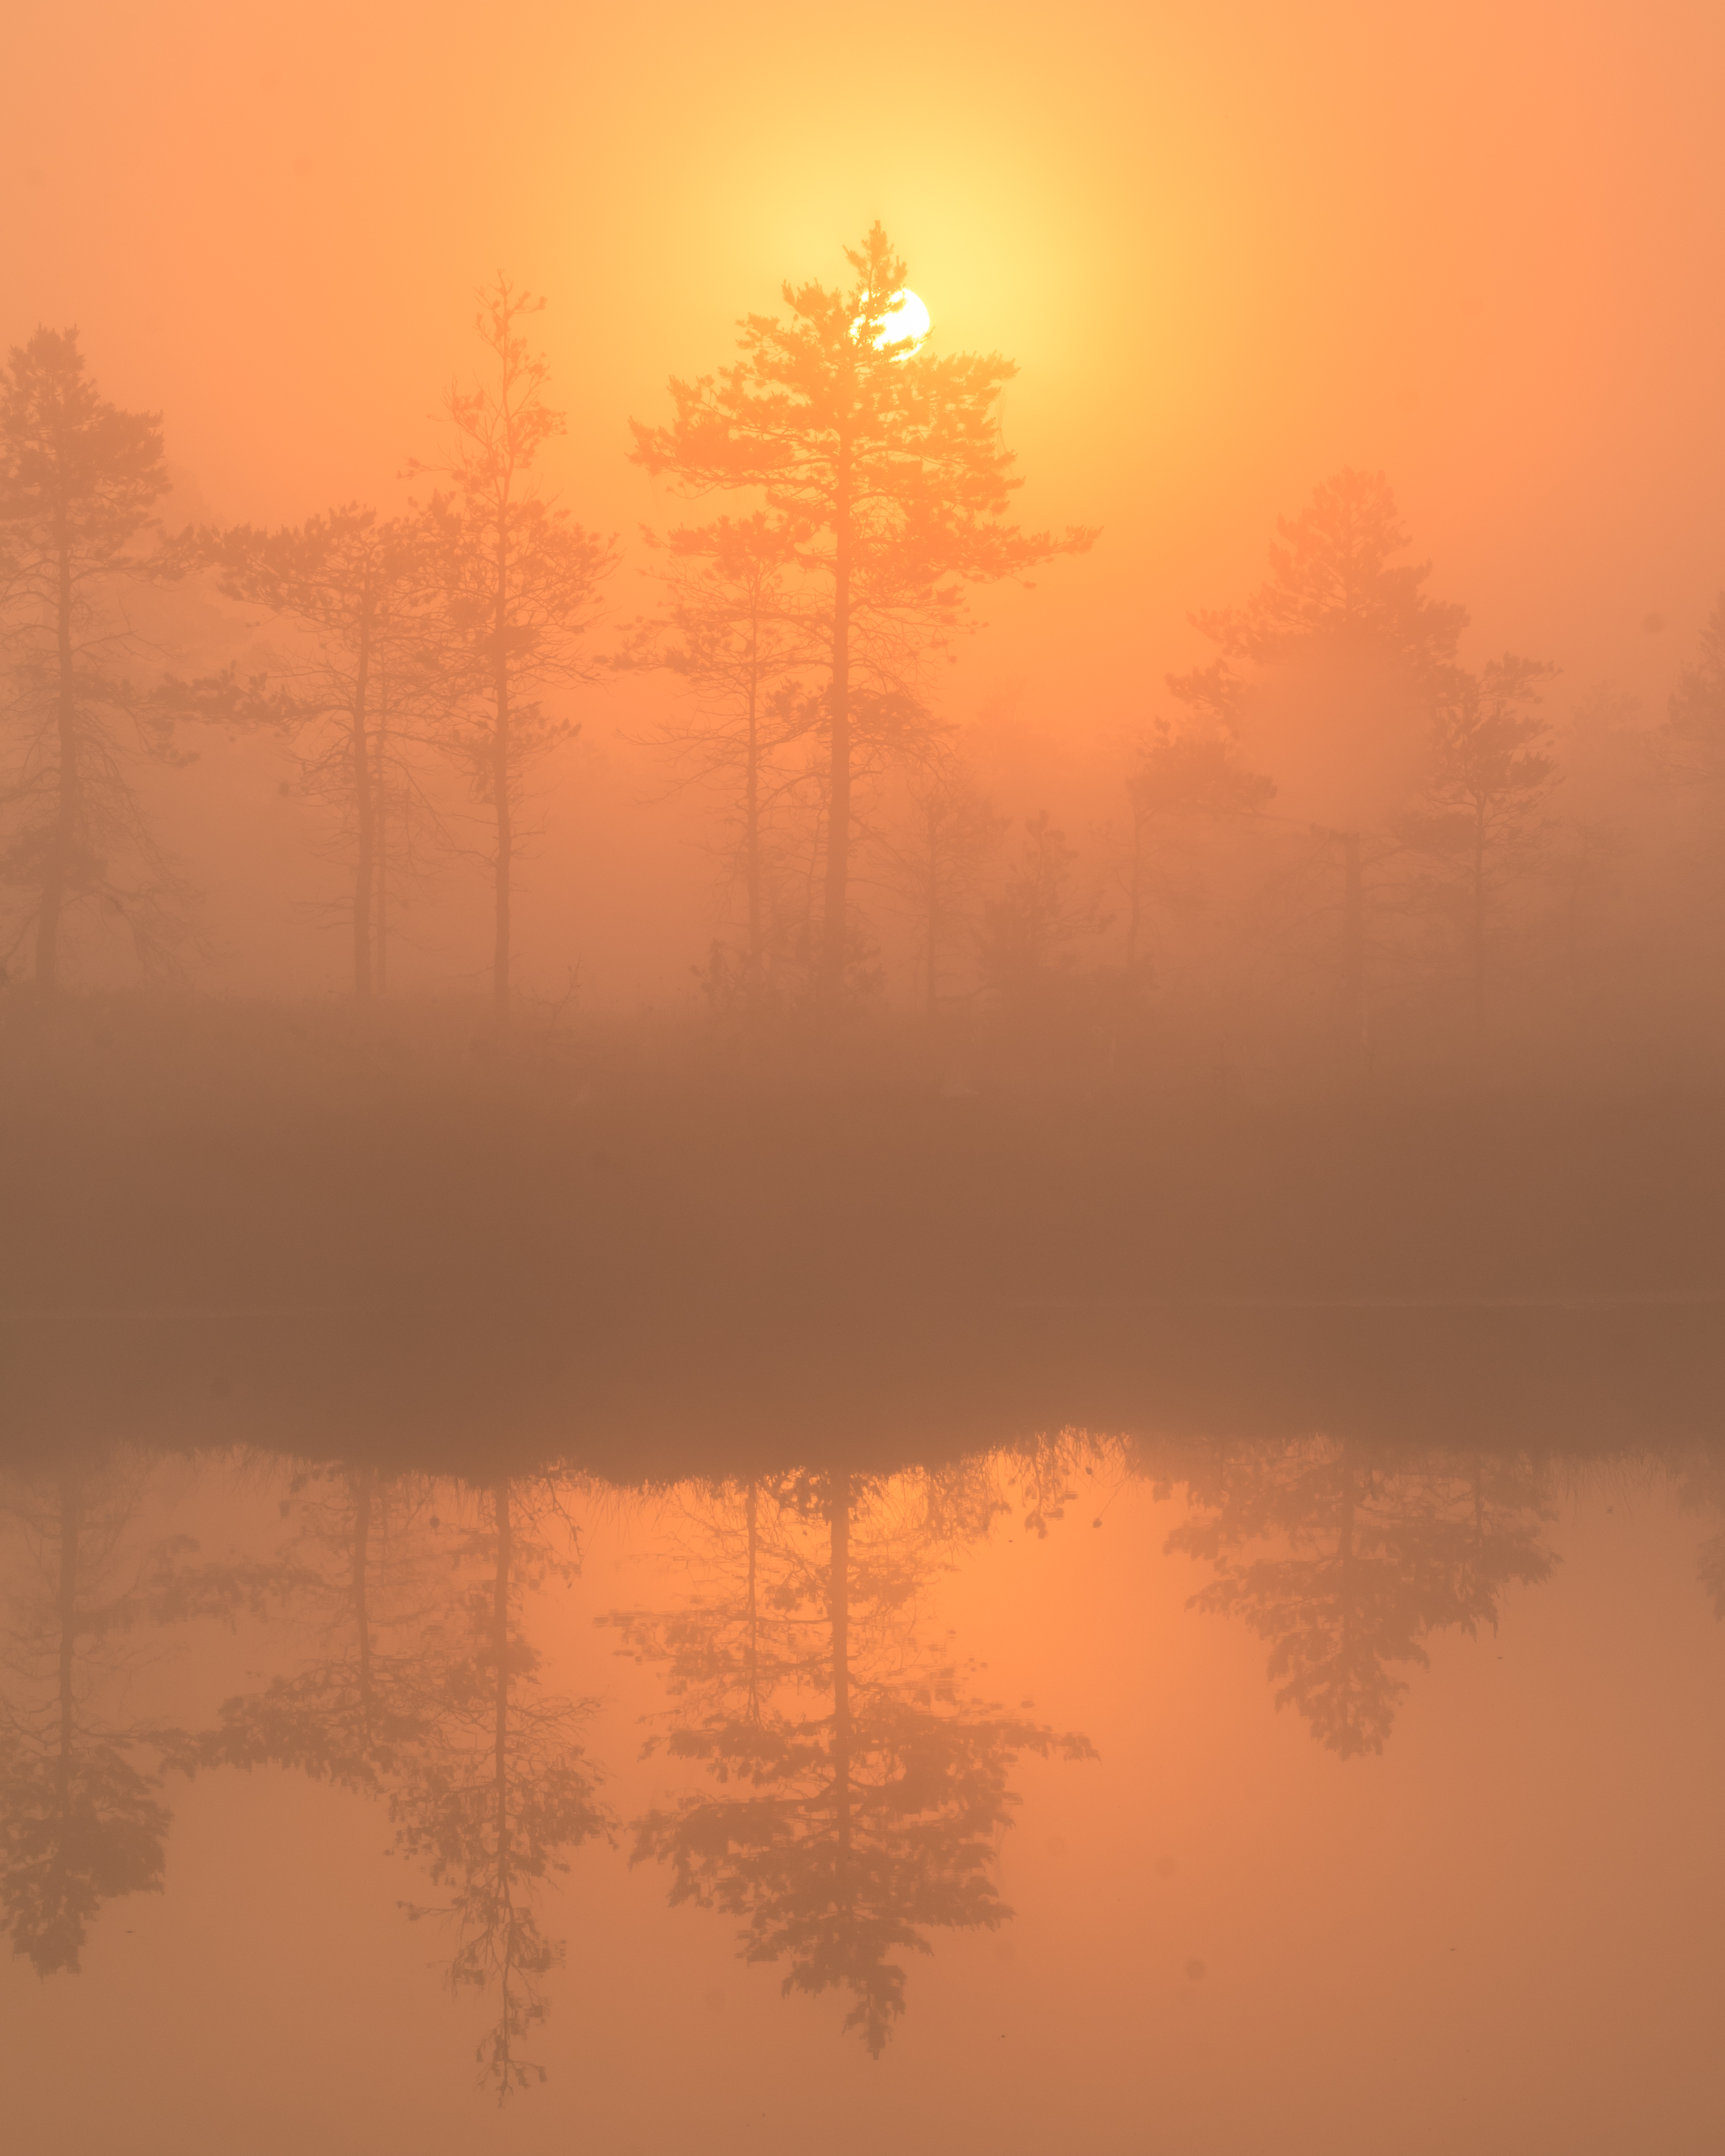 #estonia, #estoniabogs, #nature_of_estonia, #naturephotography, #naturelovers, #sunrise_sunset_photogroup, #sunriseoftheday, #foggymorning, #foggy, #goldenlight, #goldensunrise, #bog, #bogsofestonia, #kõnnusuursoo, #hikingtrails, #goldenhour, #goldengram,, Nikolai Mordan